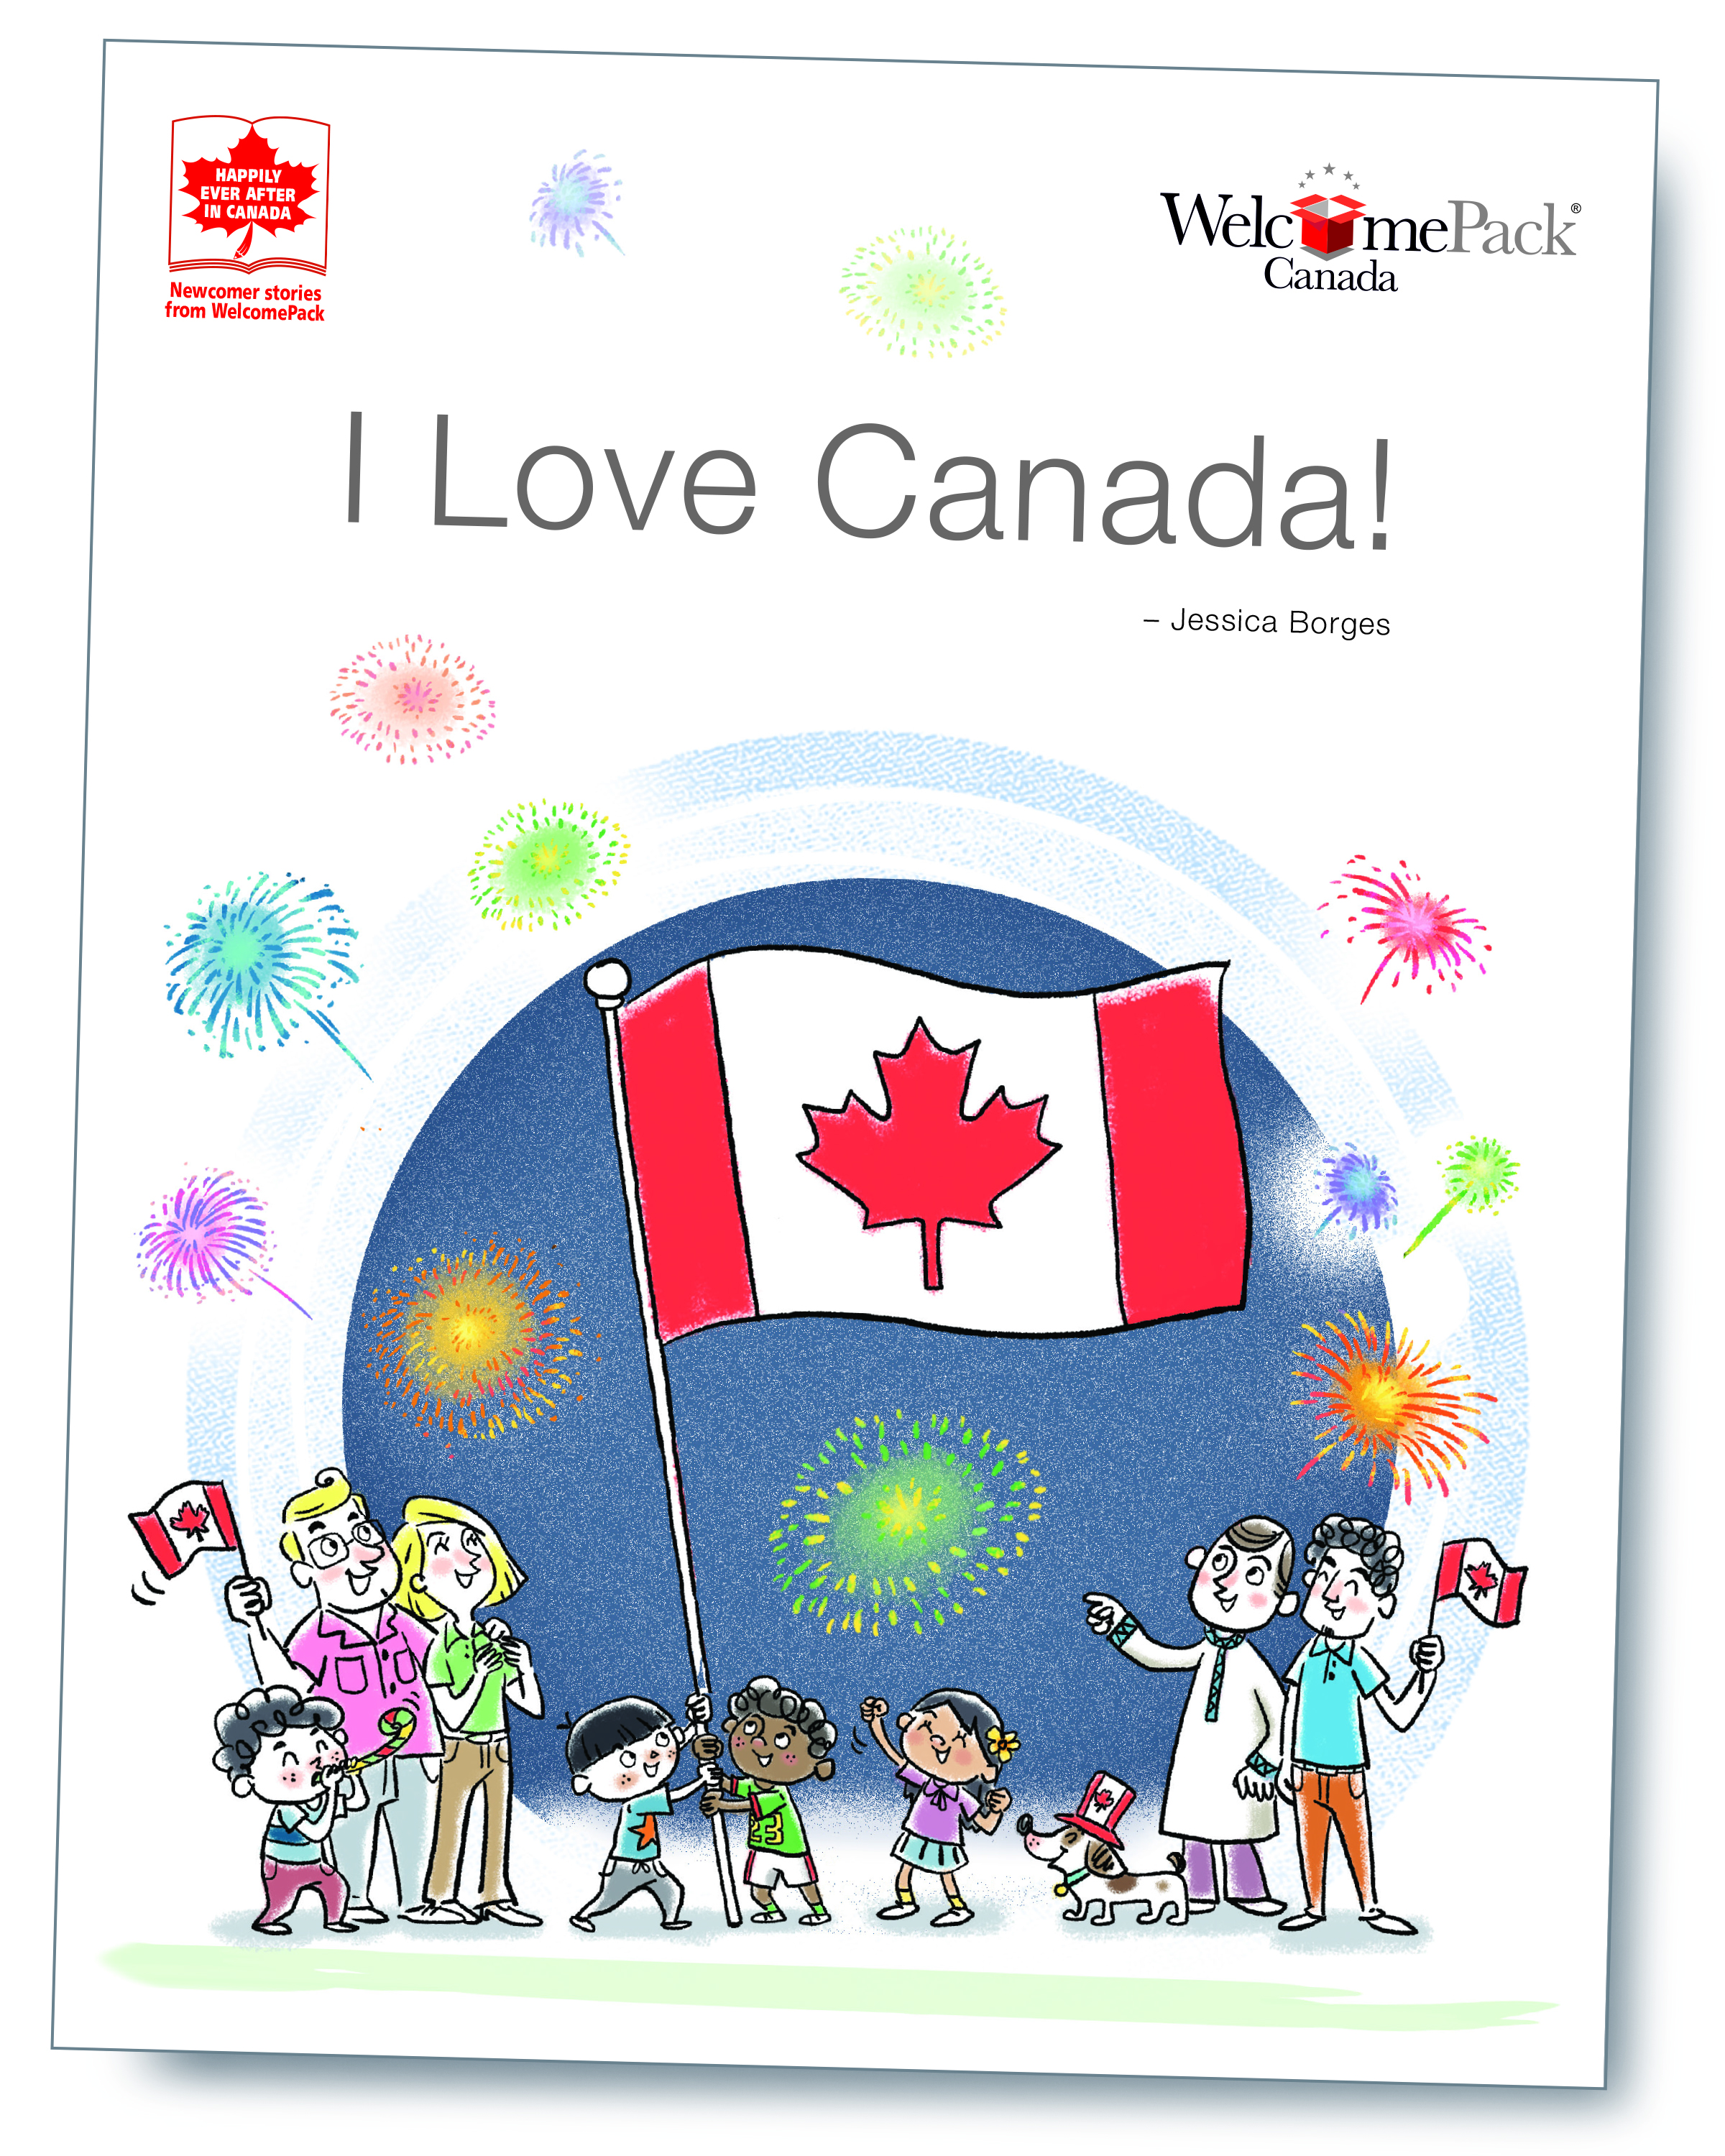 WelcomePack-Canada Day PR - photo